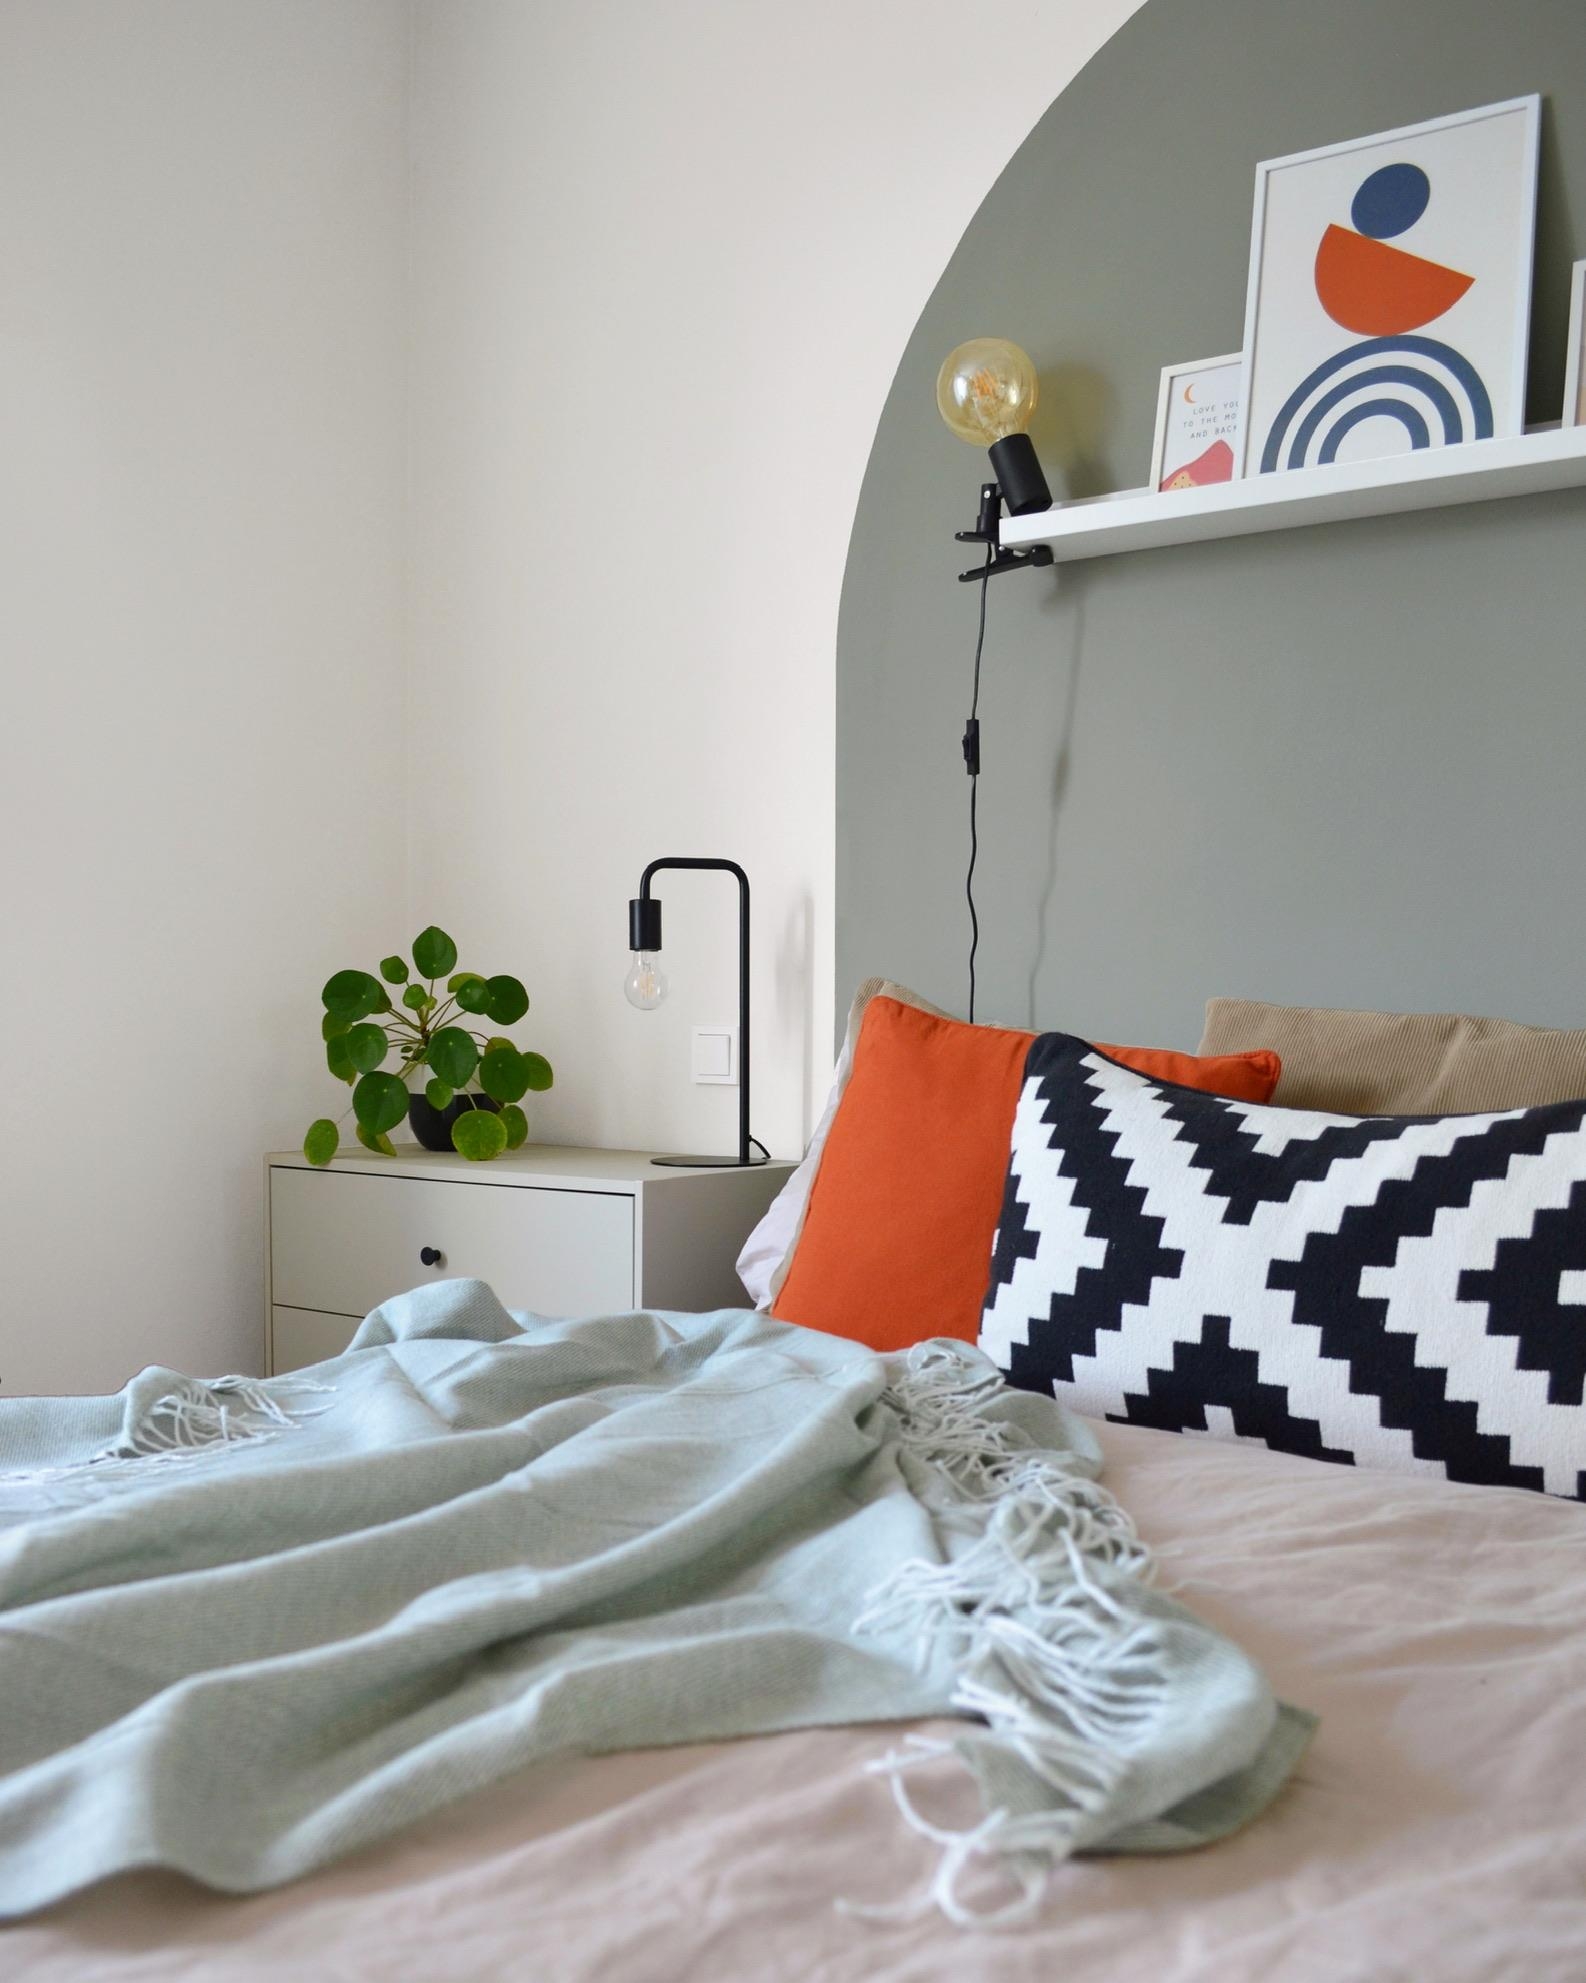 🌈👋🏼 
#interiordesign#colourpop#color#style#interior#couchliebt#solebich#homestory#bedhead#schlafzimmer#bedroom#realhomes